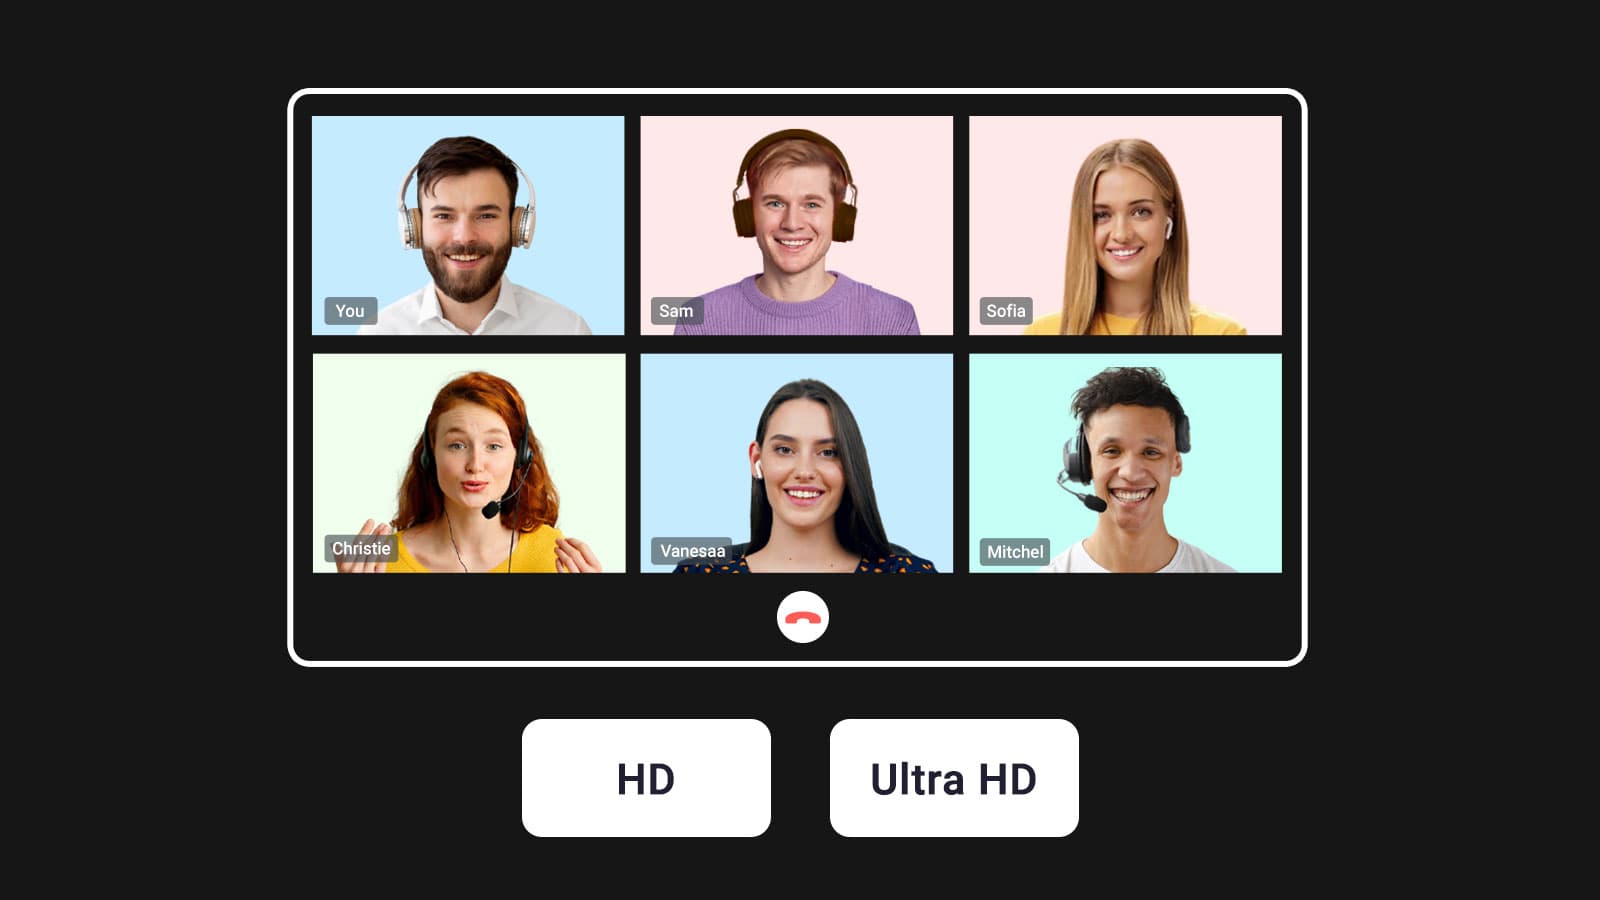 HD and Ultra HD video calls